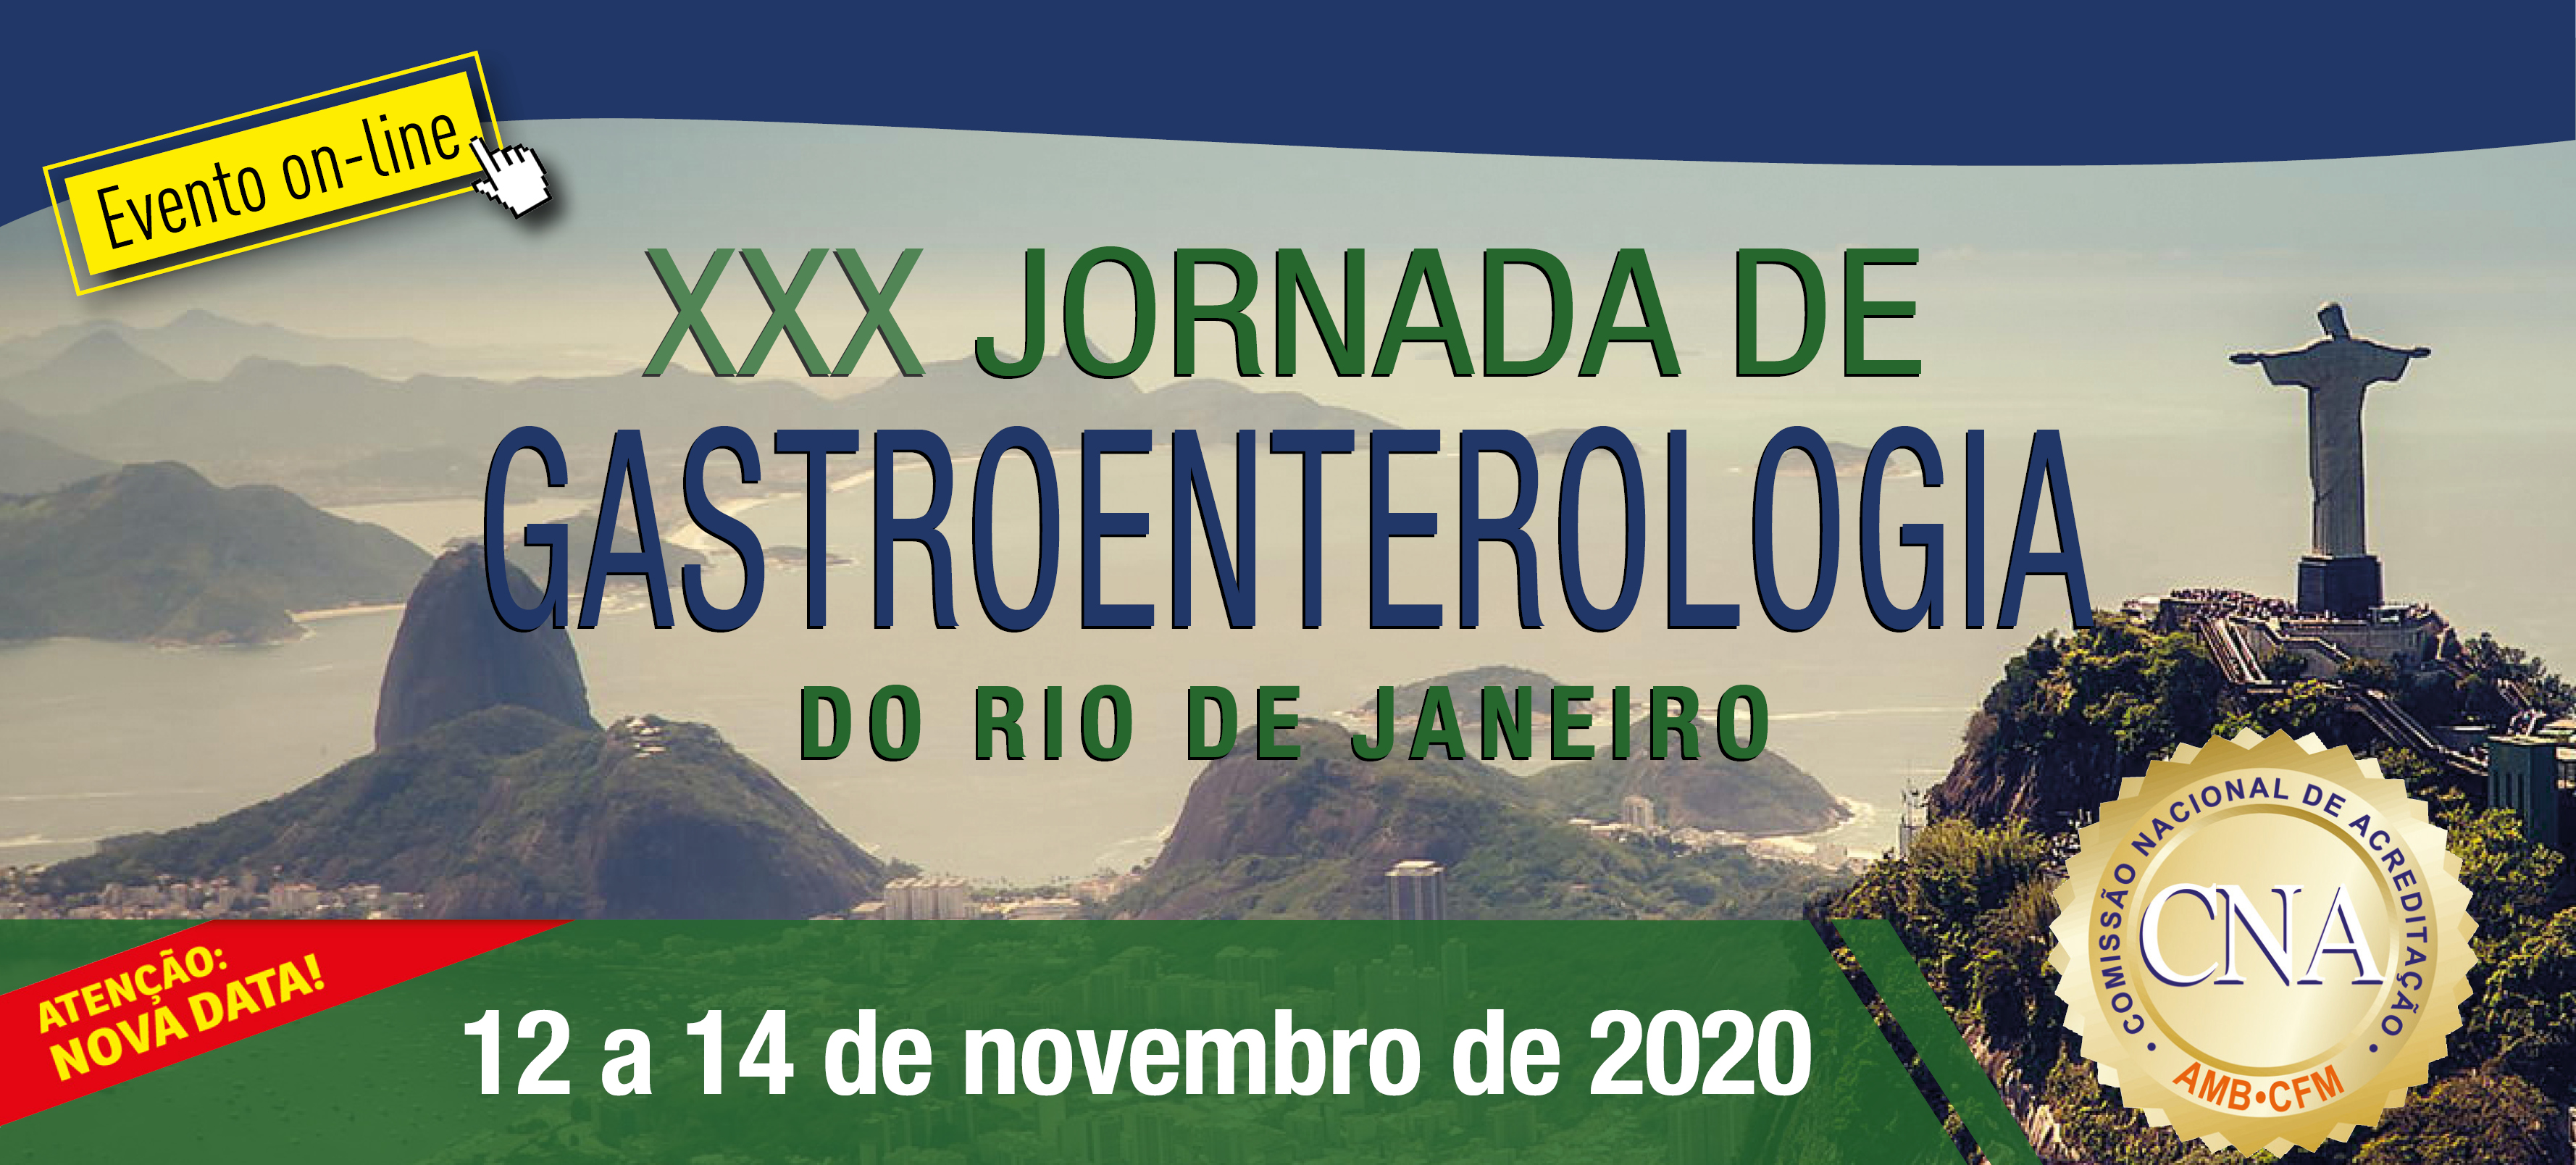 Banner site_XXX Jornada de Gastroenterologia_evento online